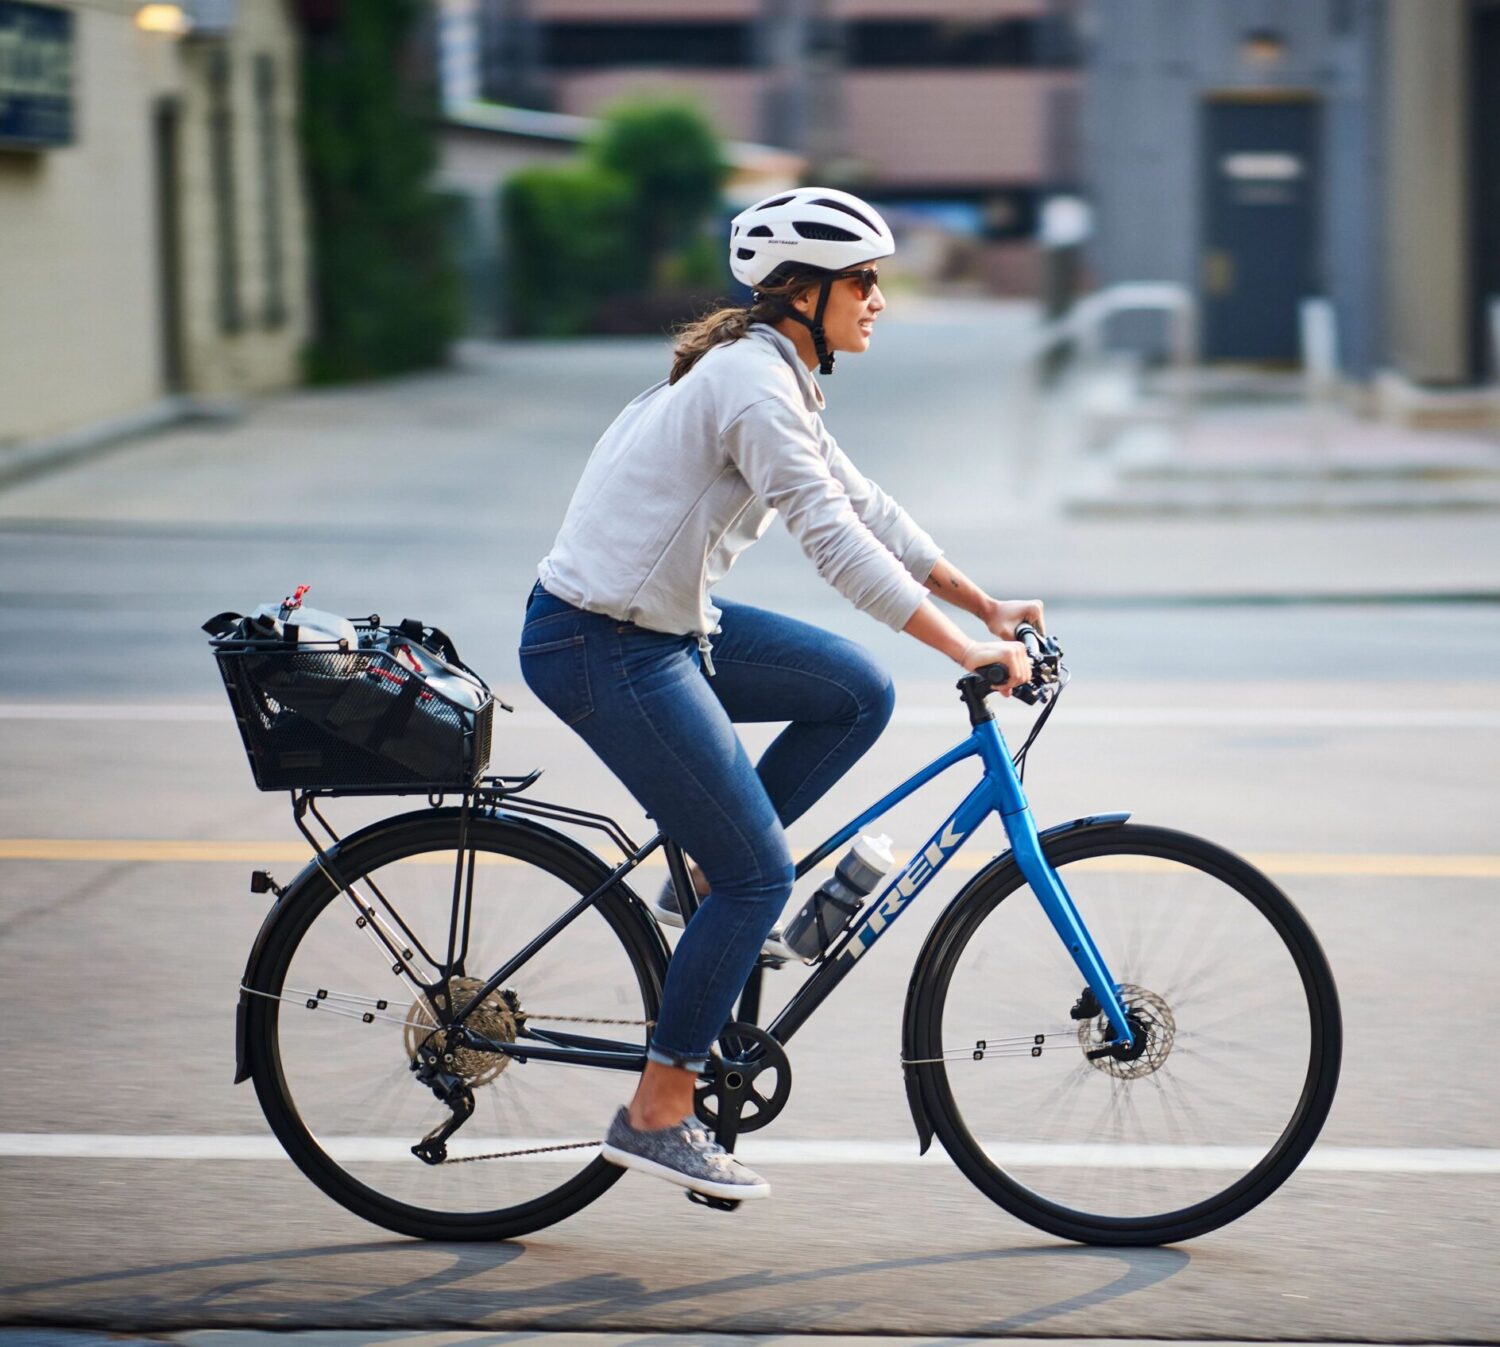 Woman riding a hybrid city bike in an urban location 